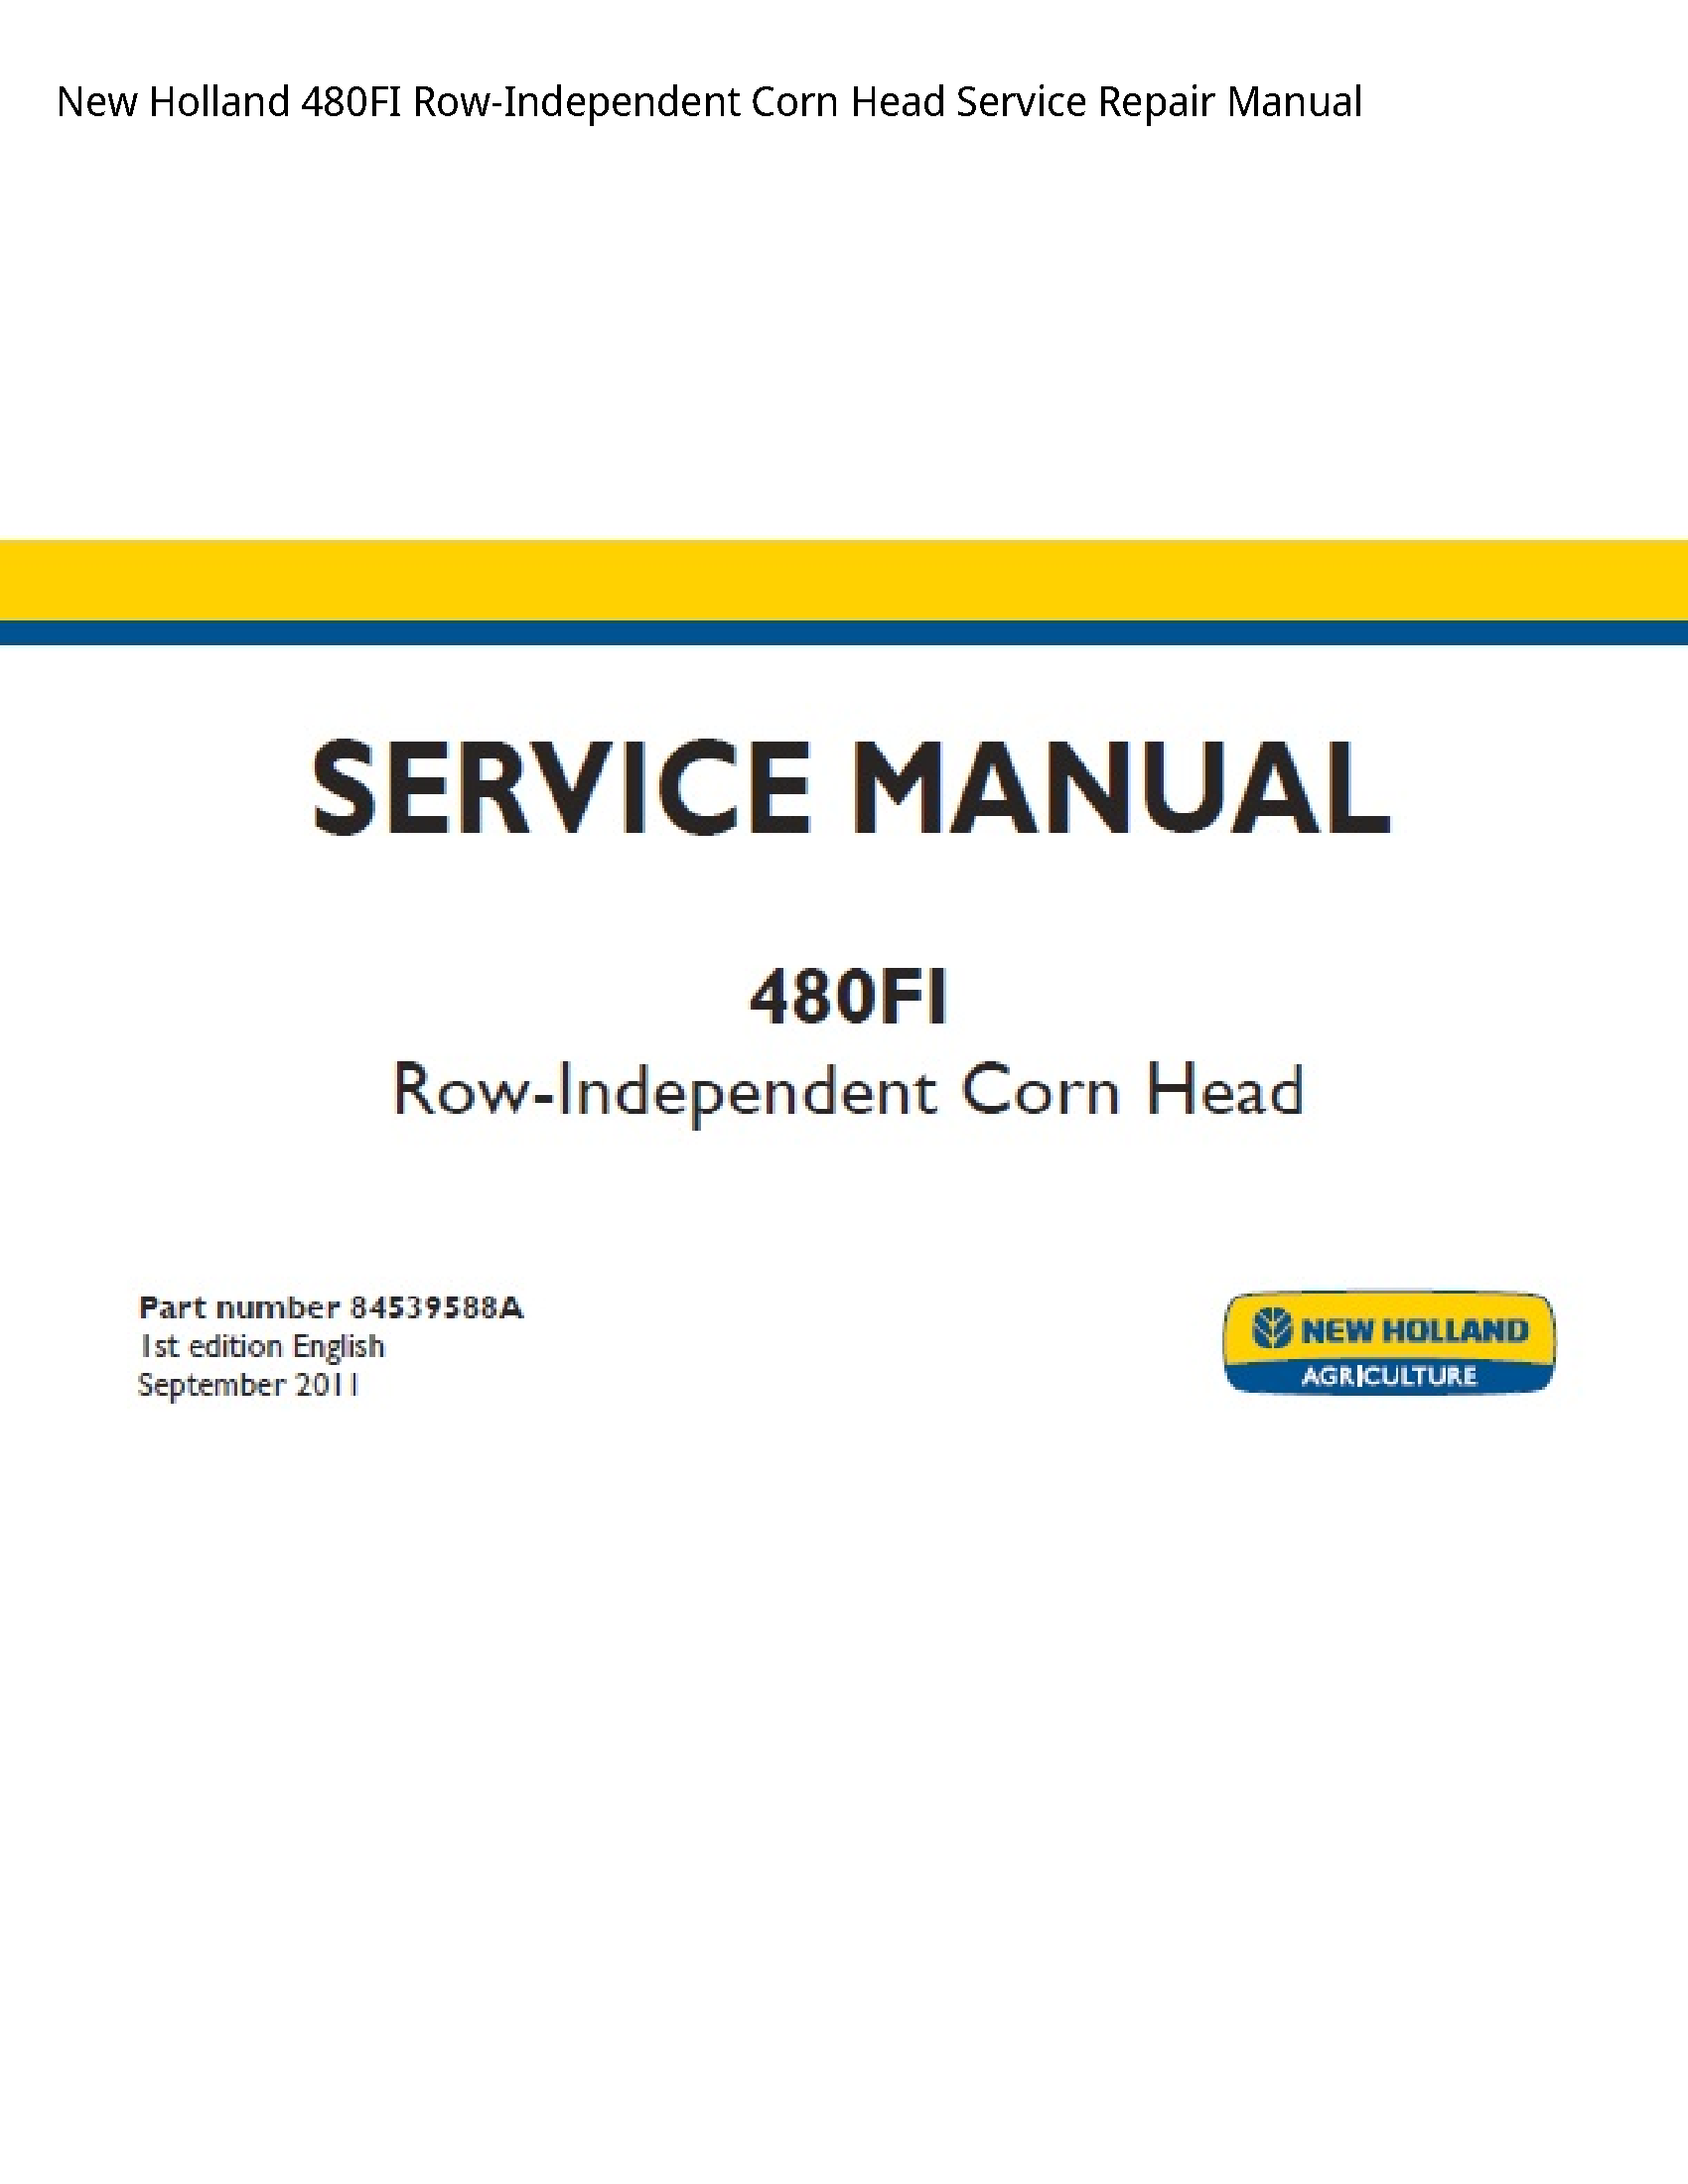 New Holland 480FI Row-Independent Corn Head manual